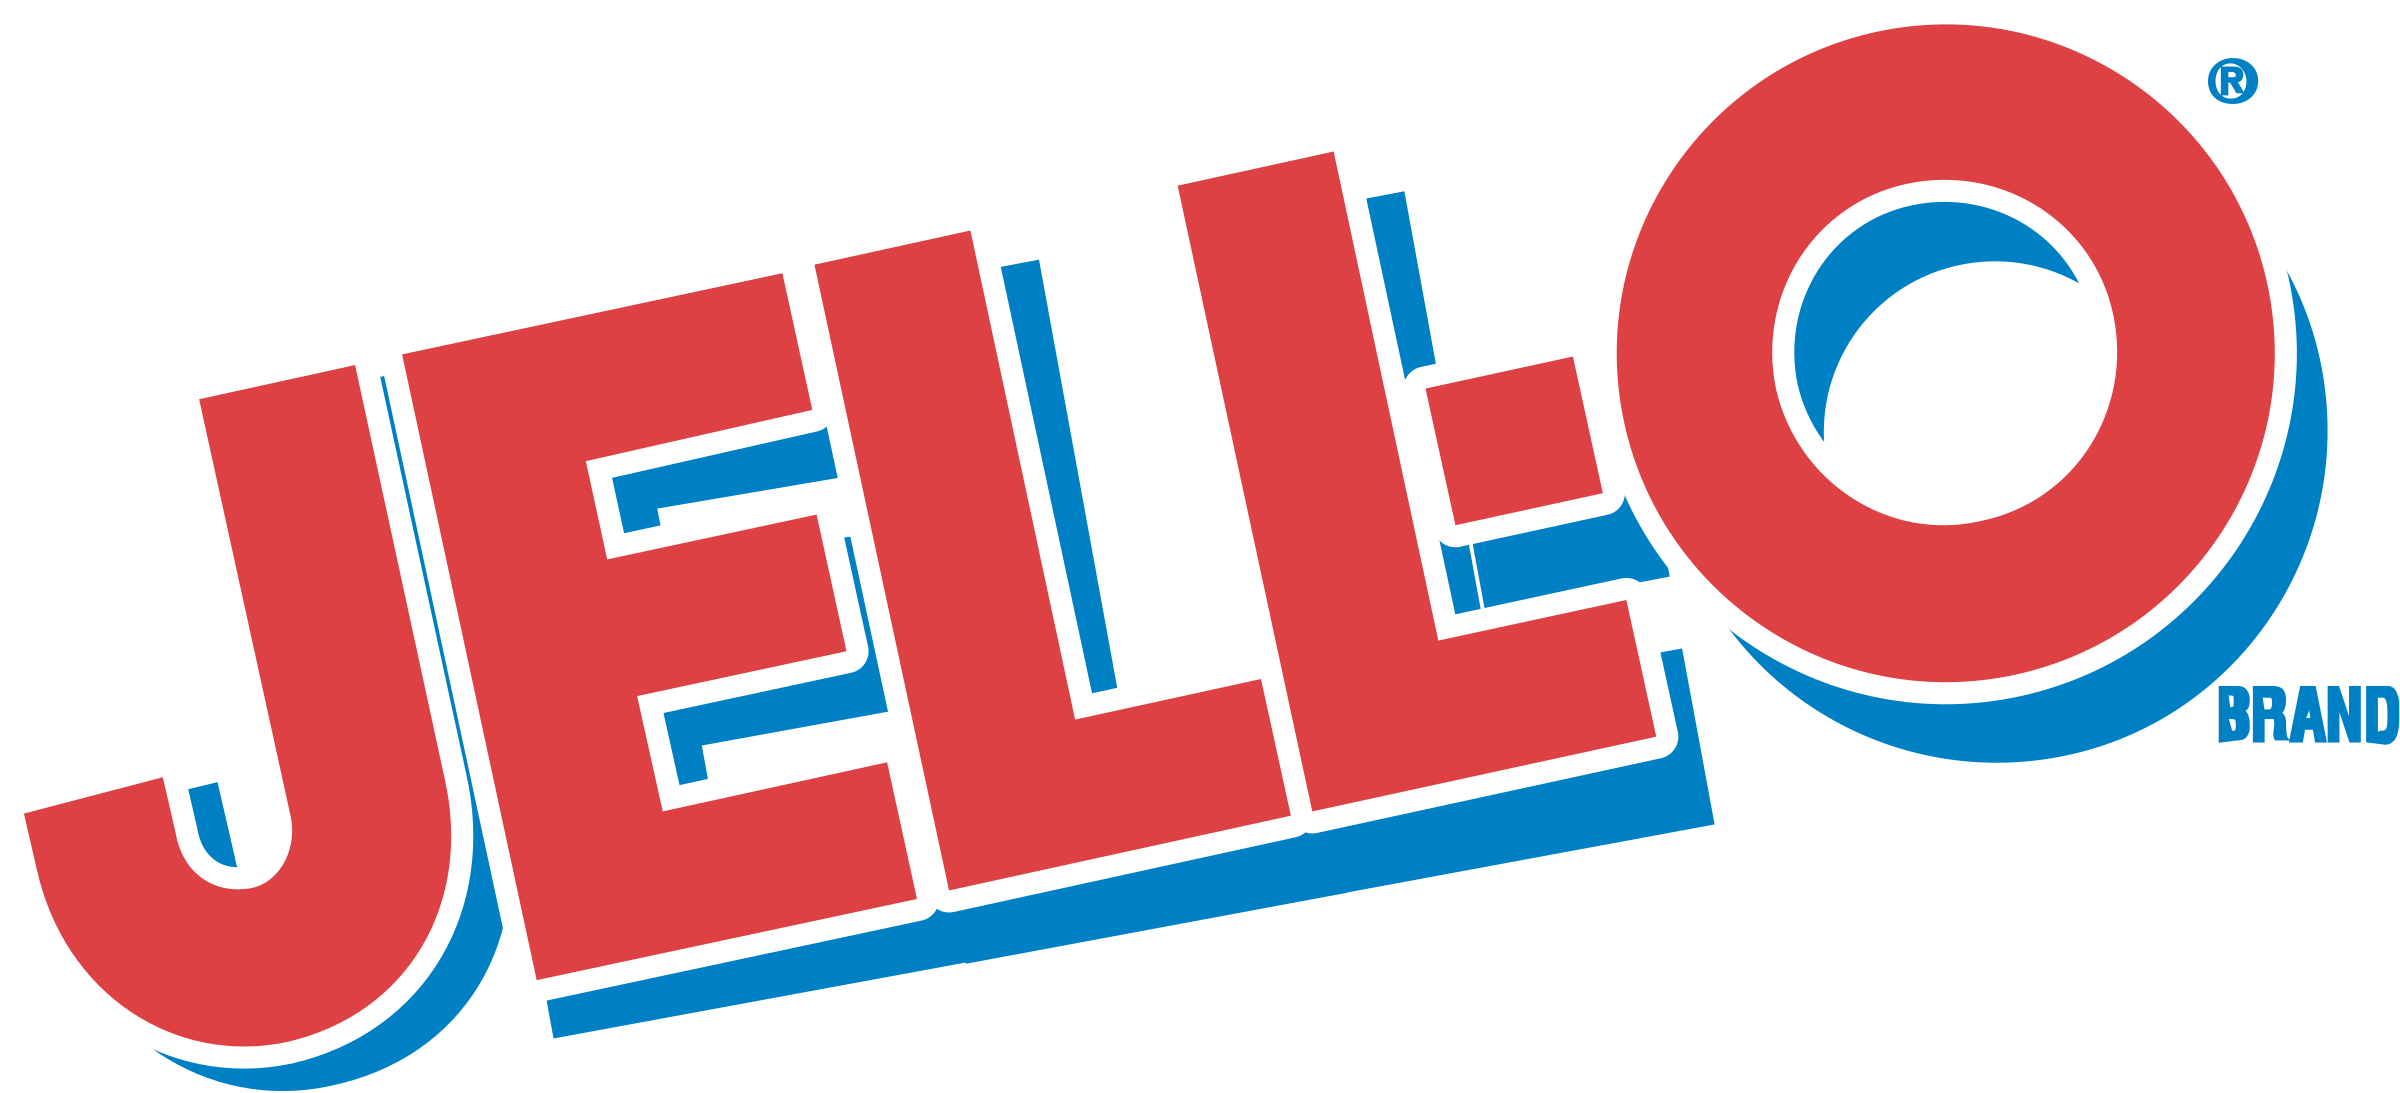 Large Red O Logo - Jell O Logo PNG Transparent & SVG Vector